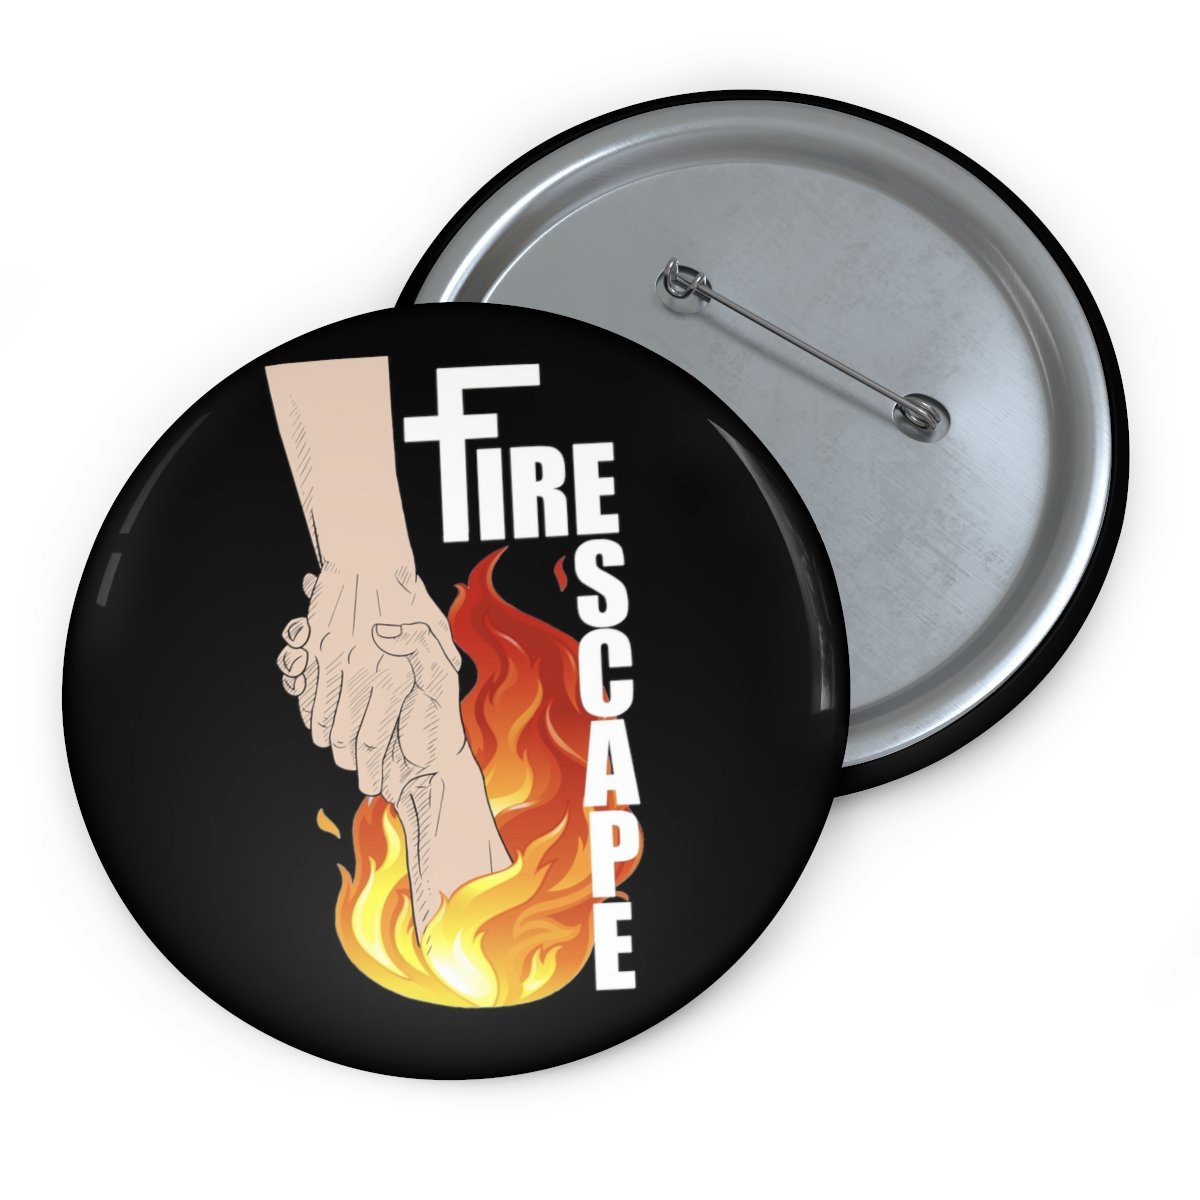 Fire Escape Logo Pin Buttons